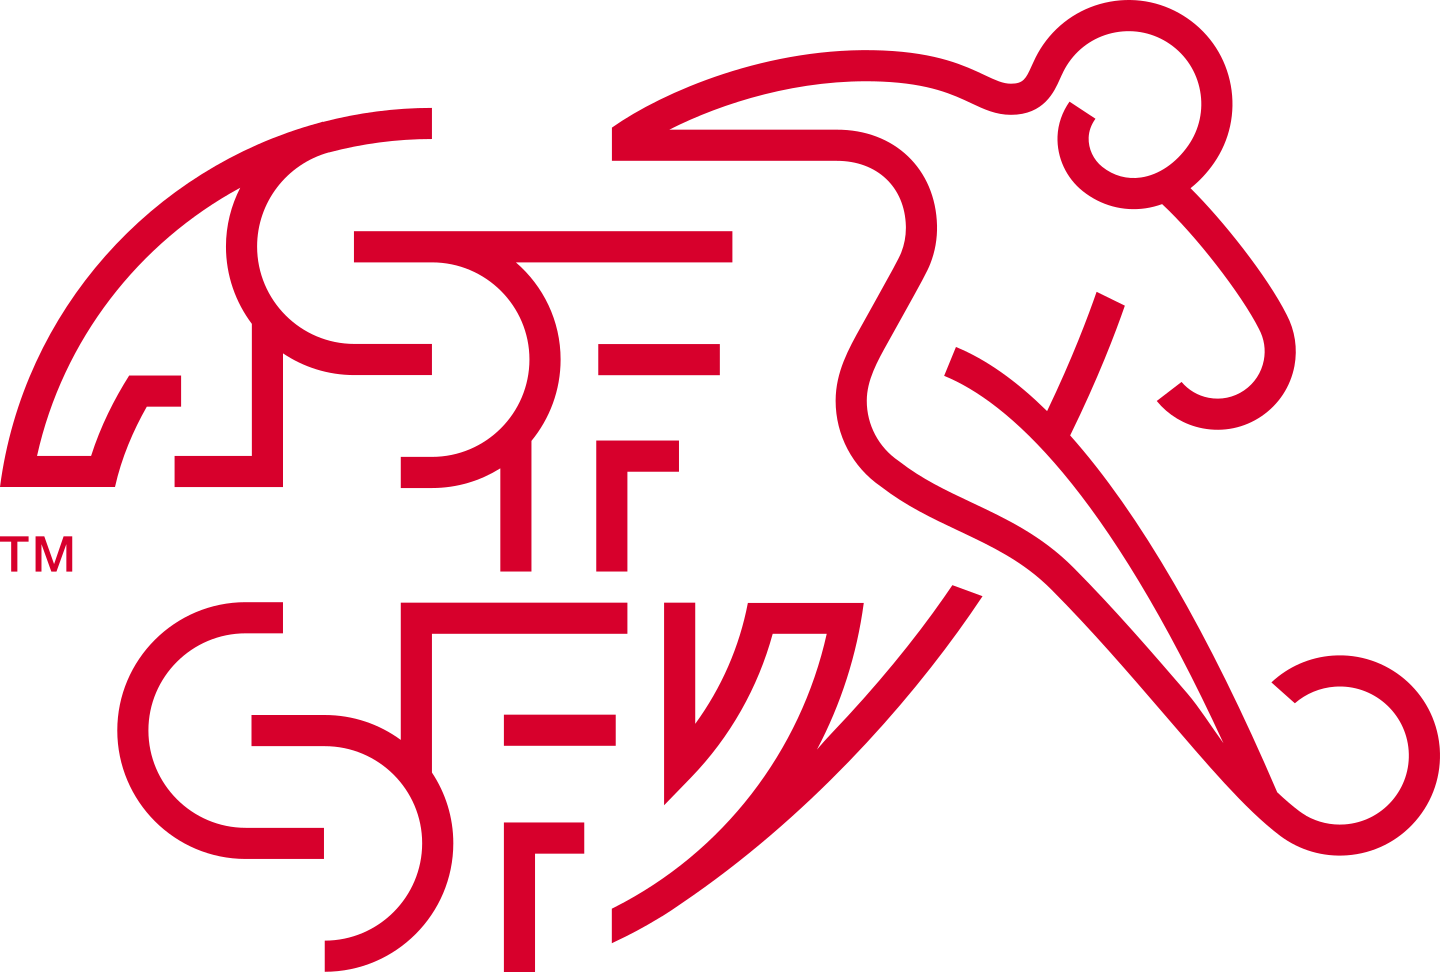 Switzerland National Football Team Logo.